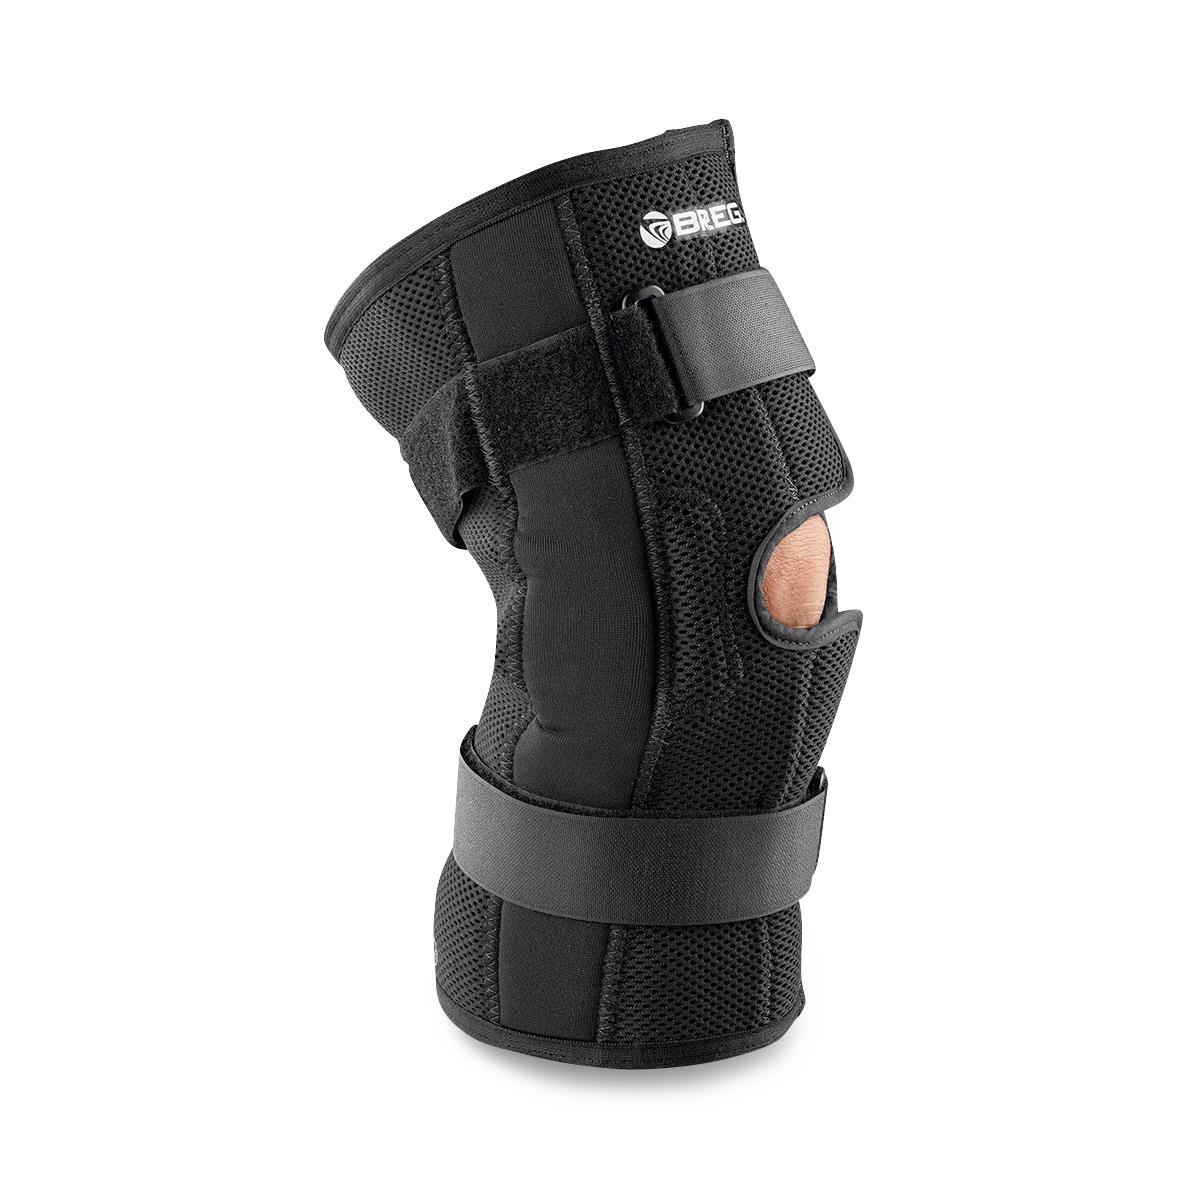 Breg Fusion Lateral OA Plus Knee Brace - Shop Our Rehabilitation